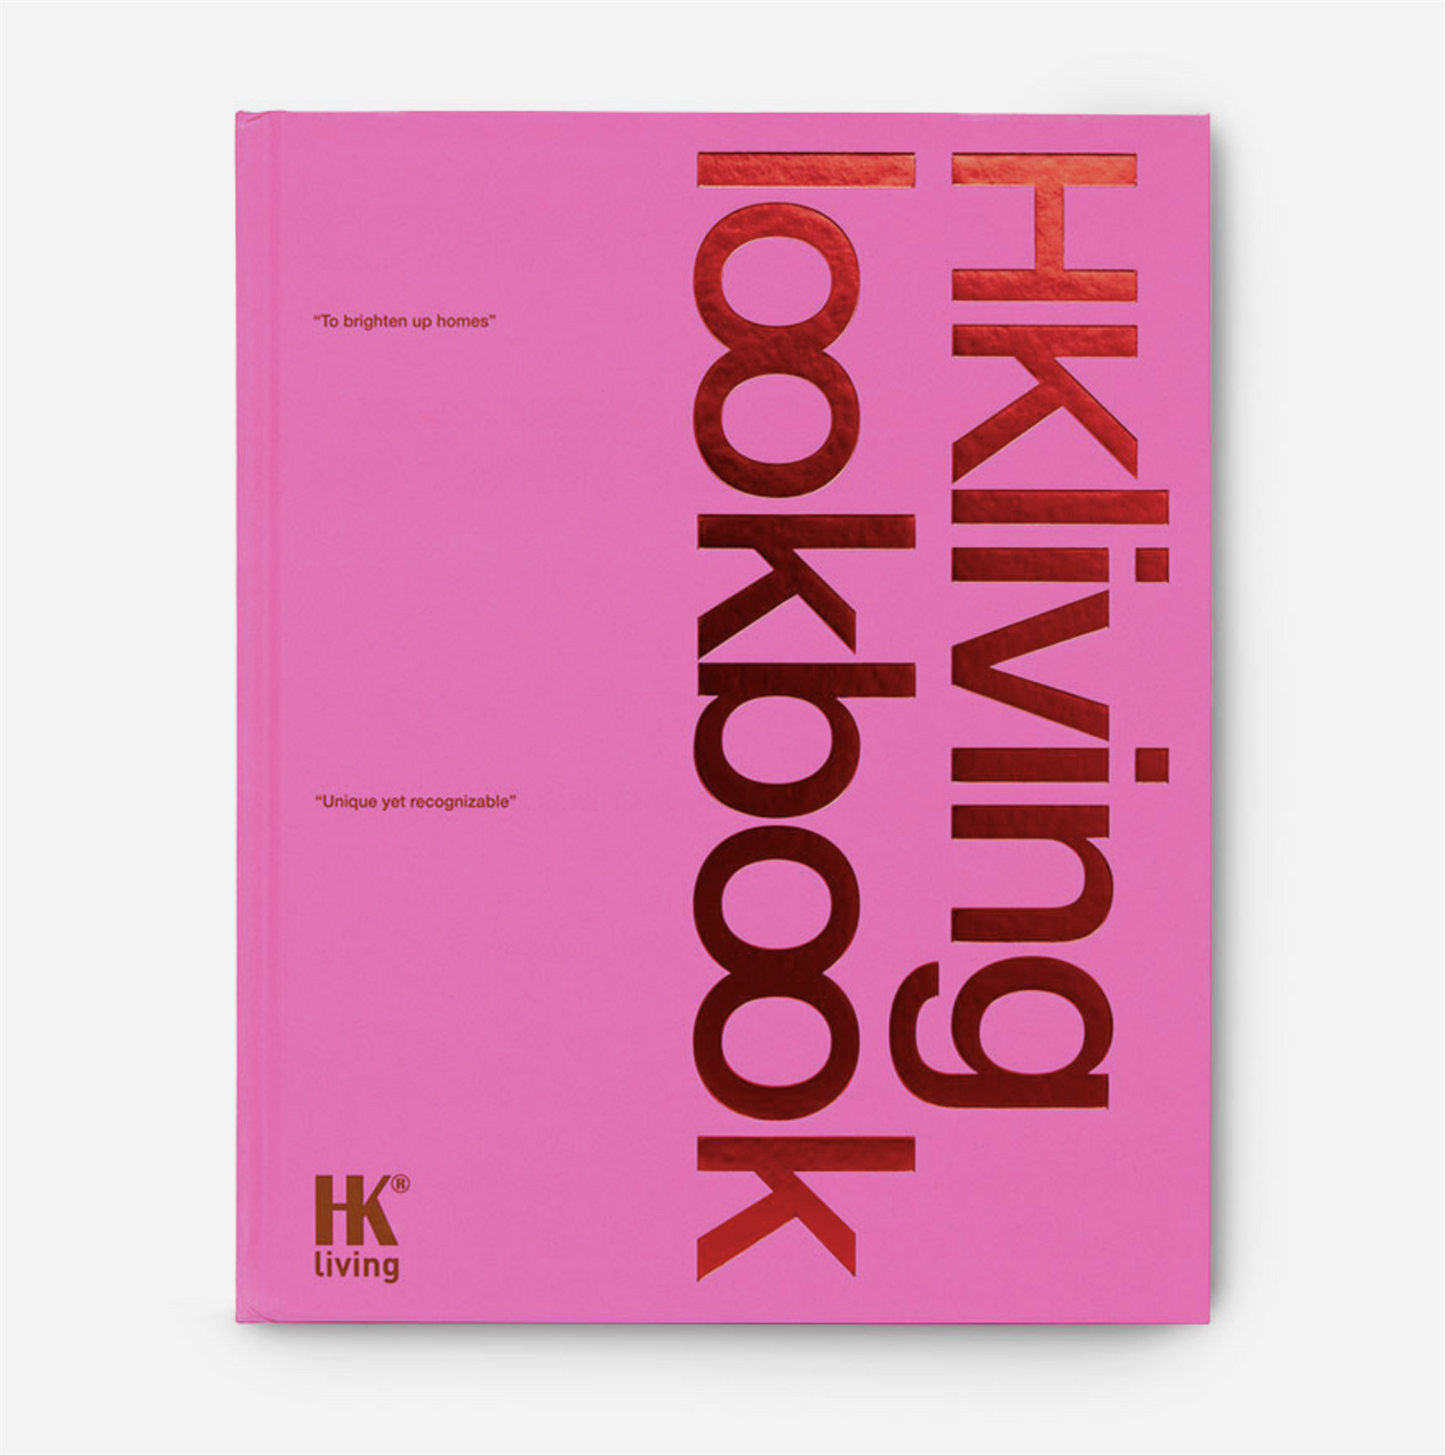 Coffe table book, lookbook pink